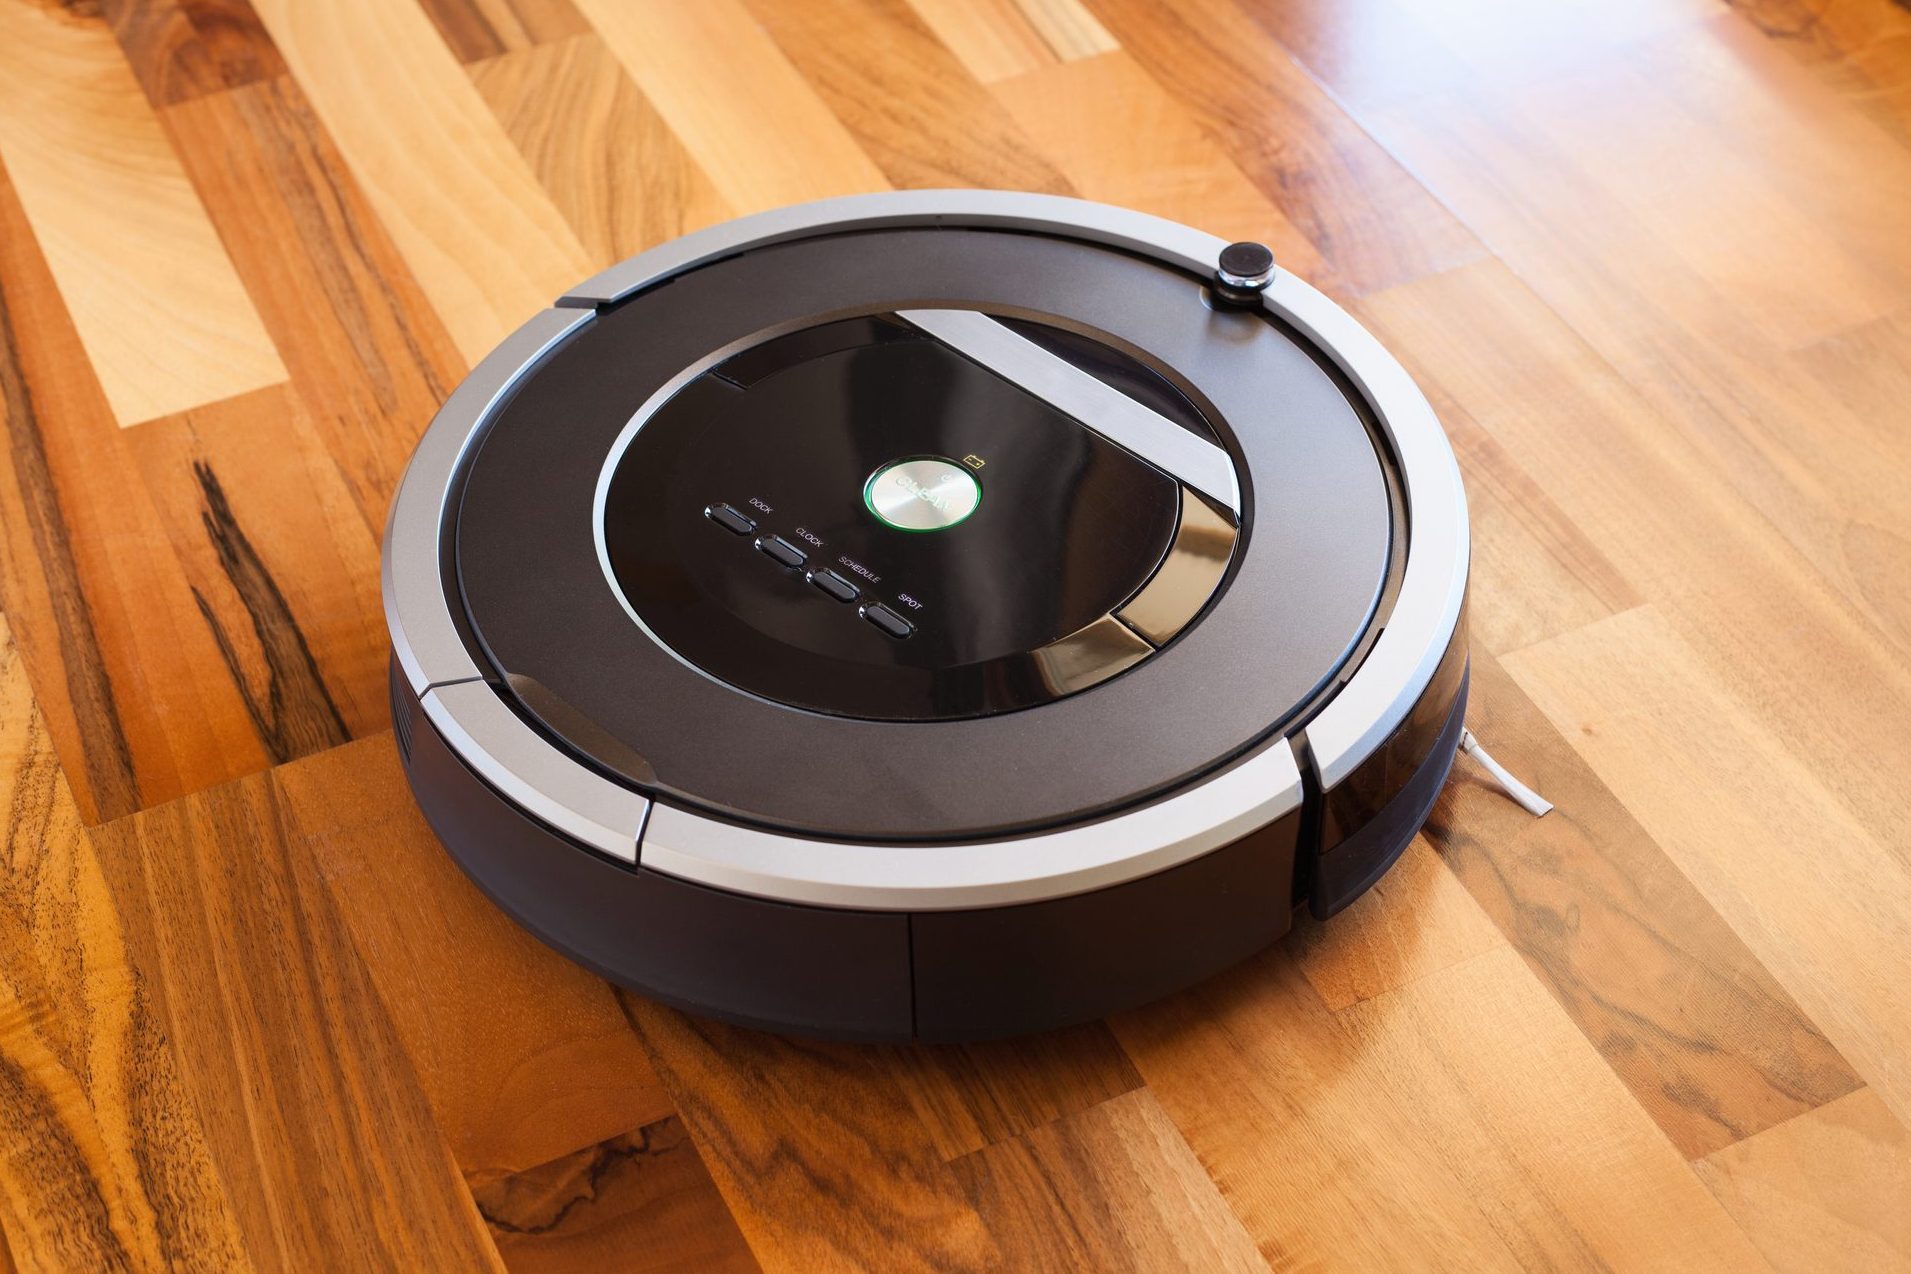 Mangler Morse kode Orient Are Robot Vacuums Worth It? Reader's Digest Investigates